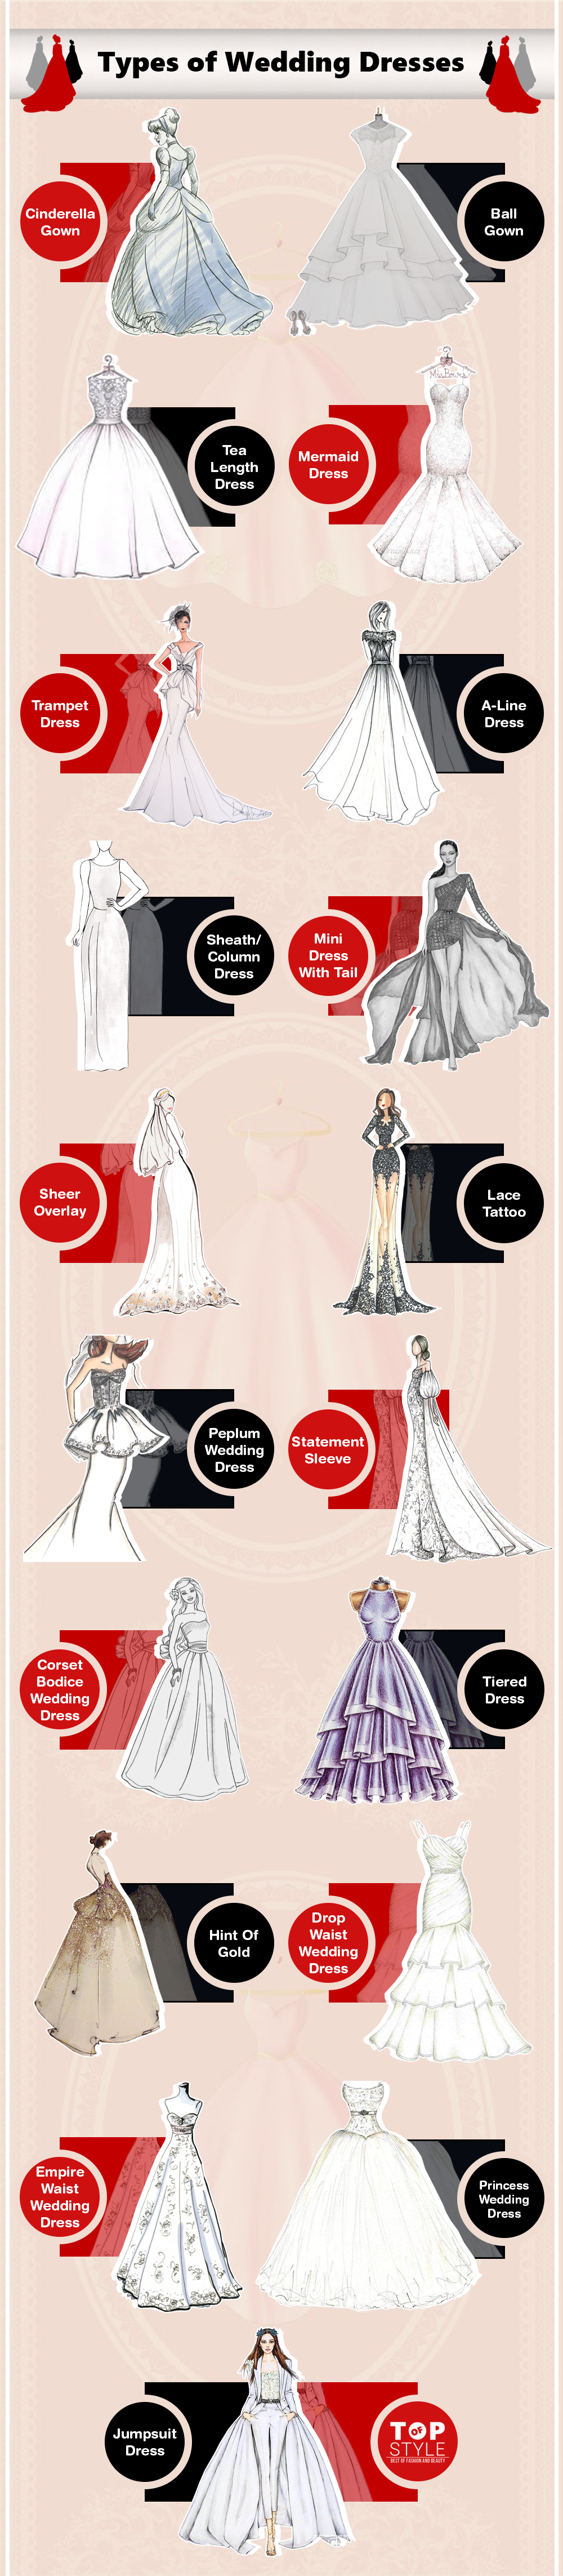 different type of wedding dresses